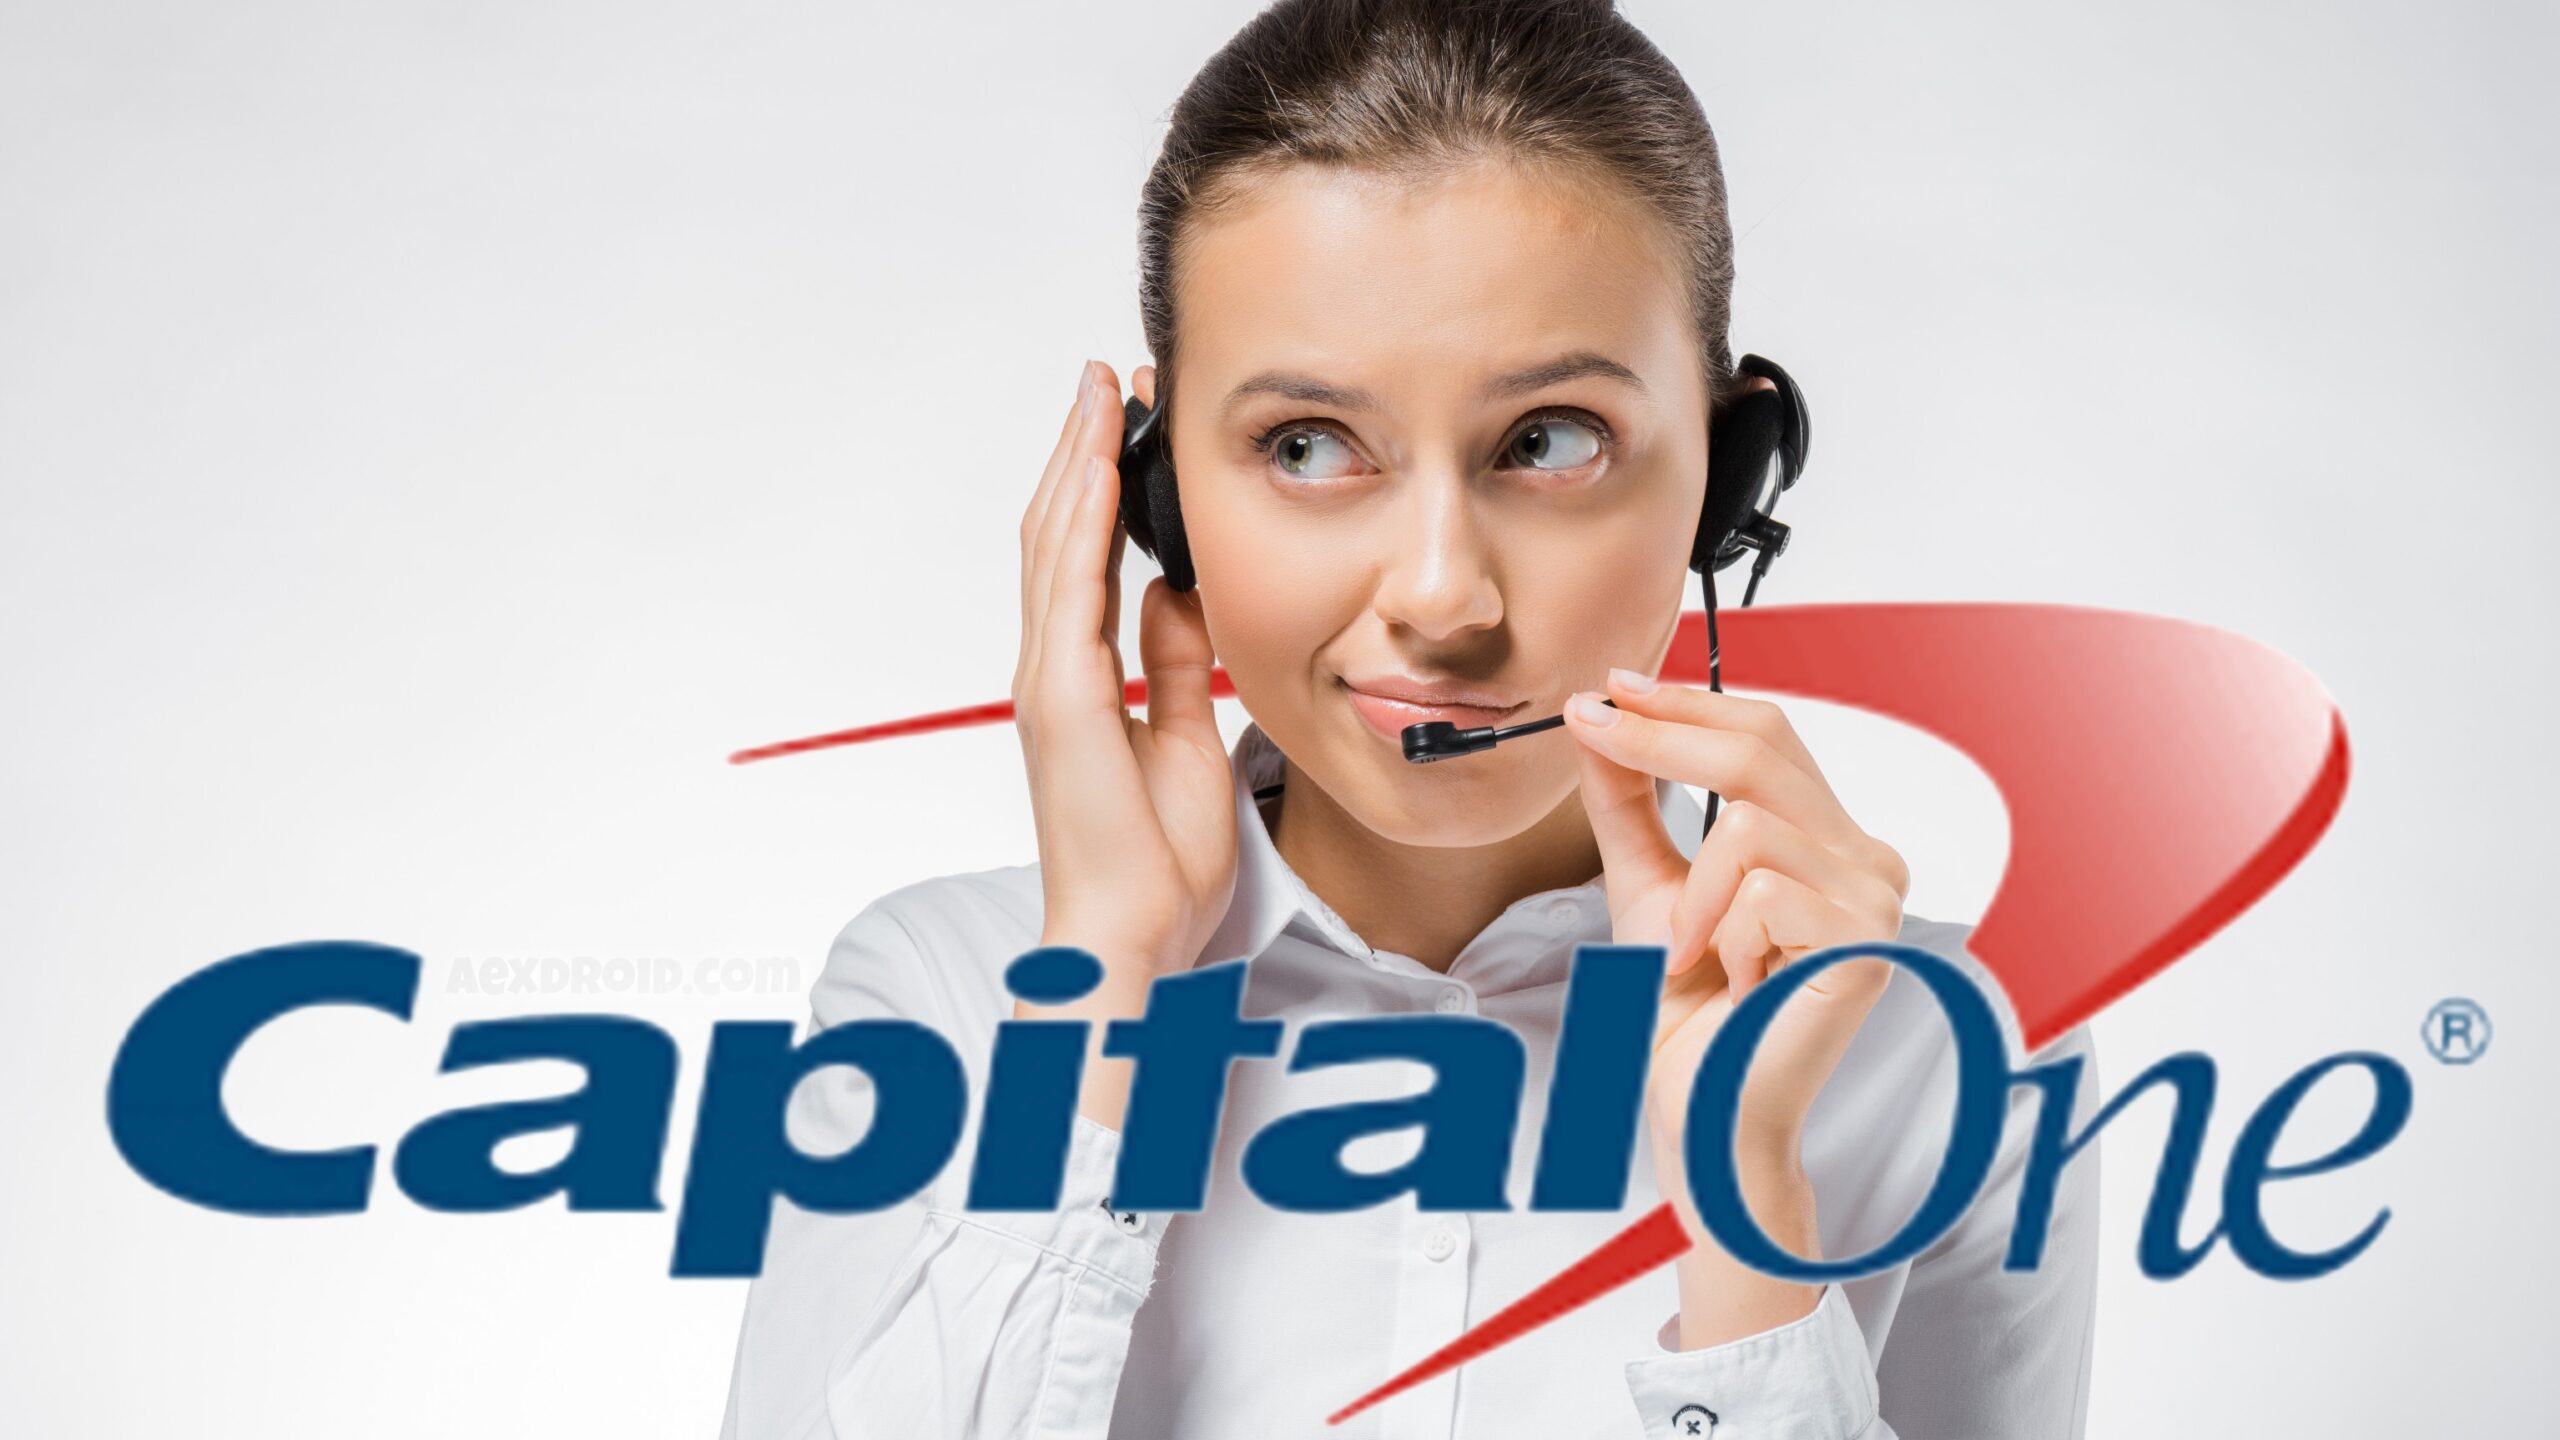 capital one auto finance customer service